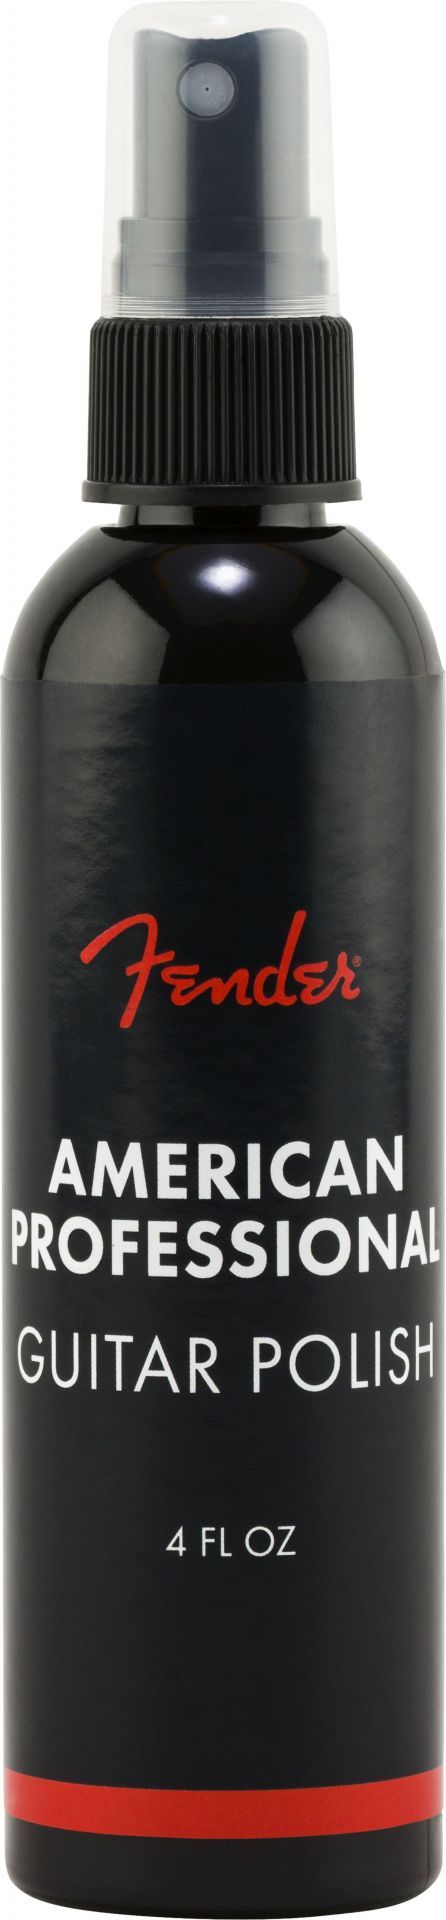 Fender American Professional Guitar Polish